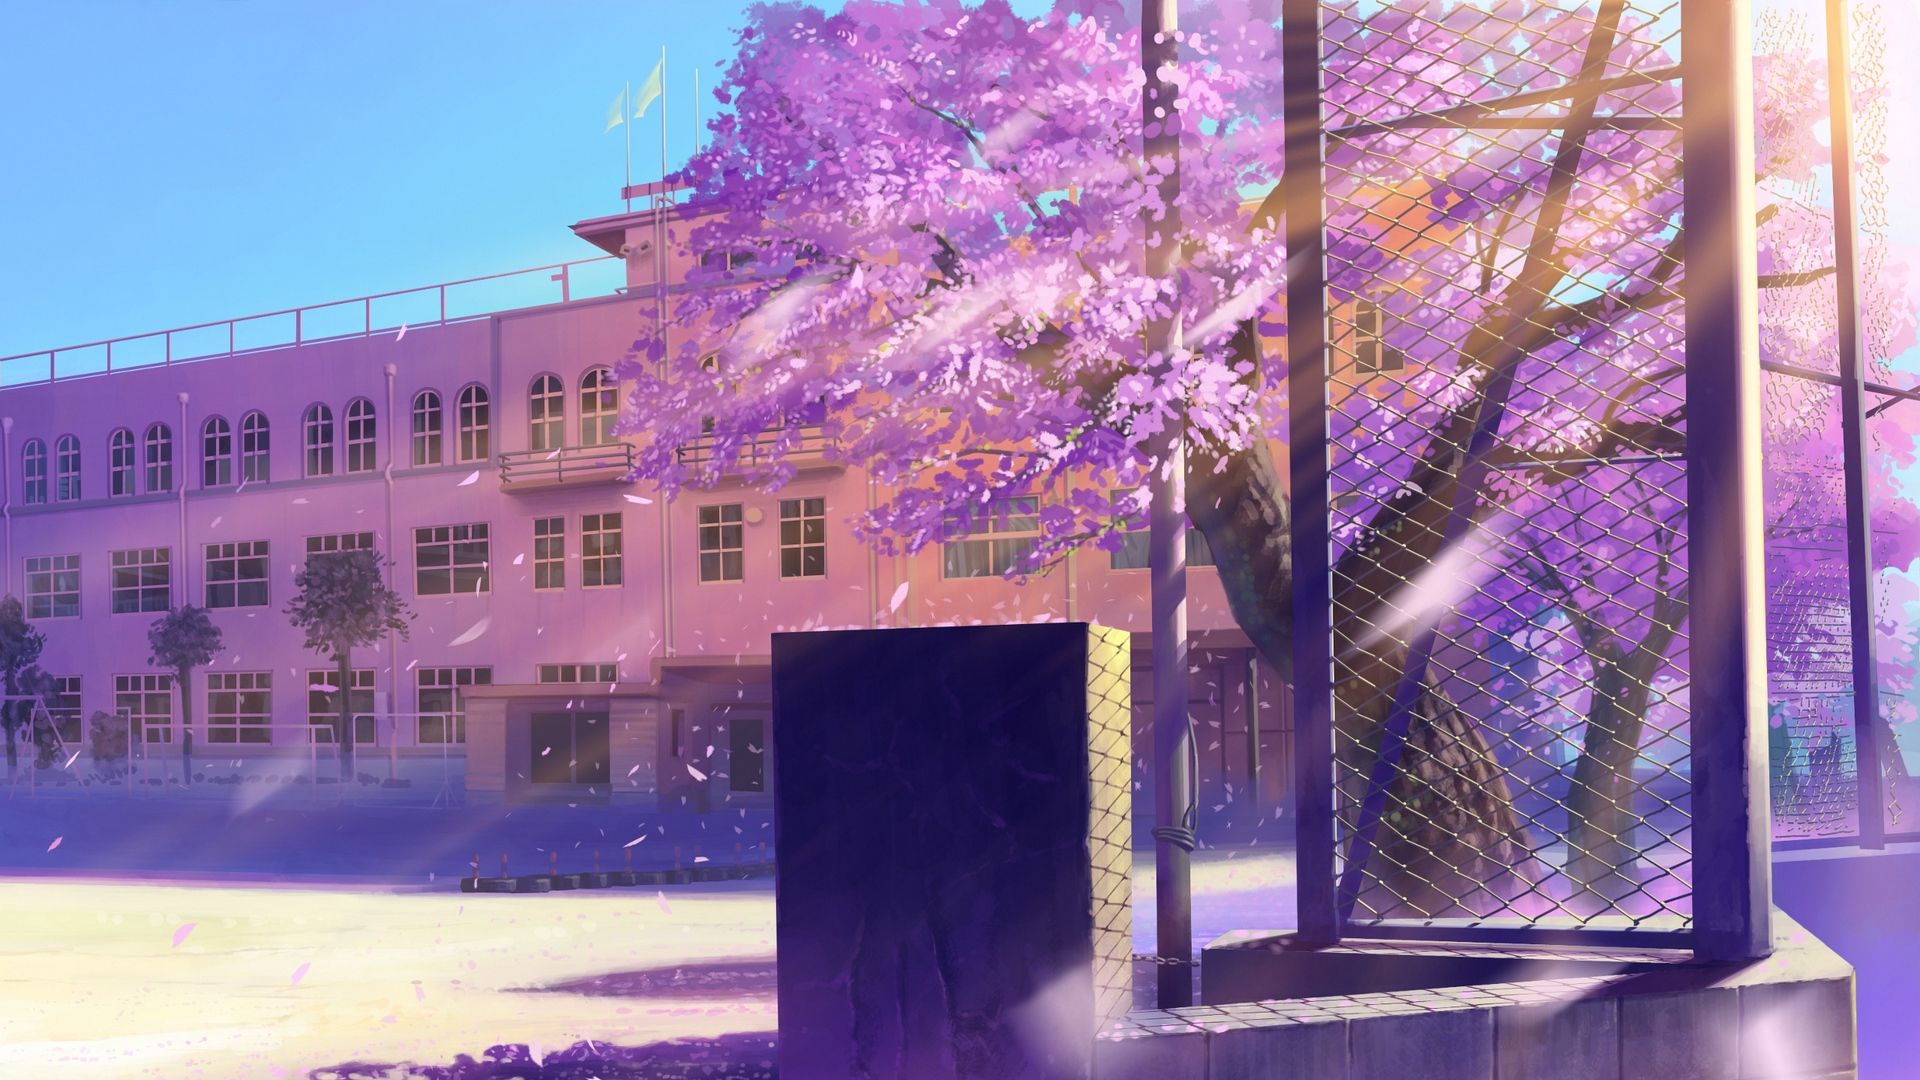 Download wallpaper 1920x1080 anime, school, winter street full HD